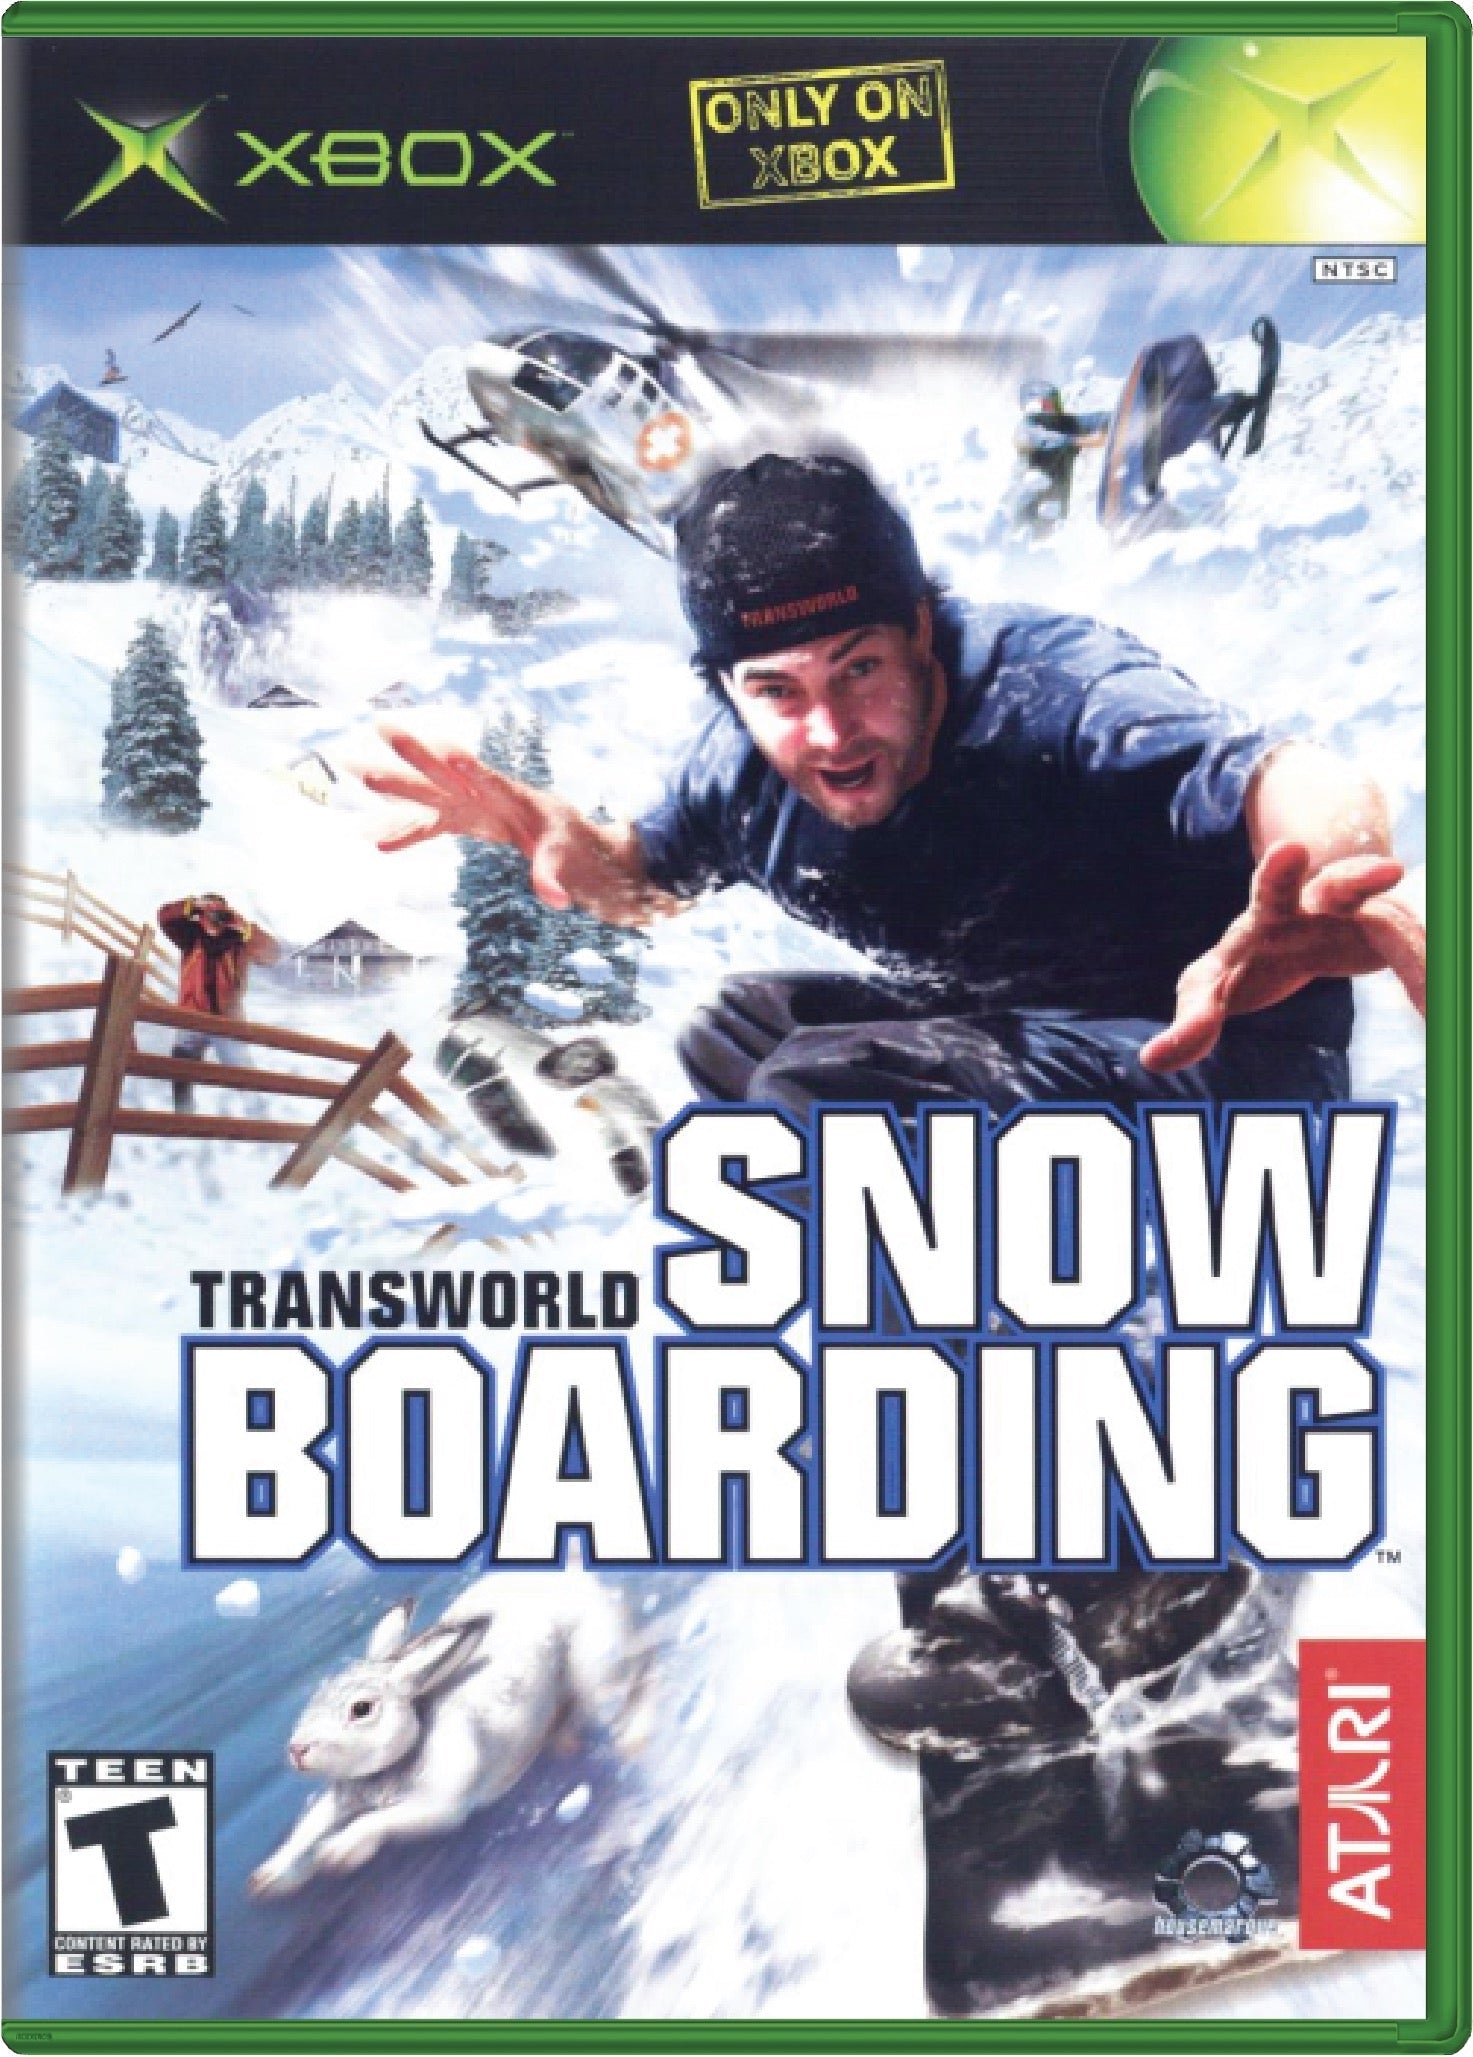 TransWorld Snowboarding Cover Art